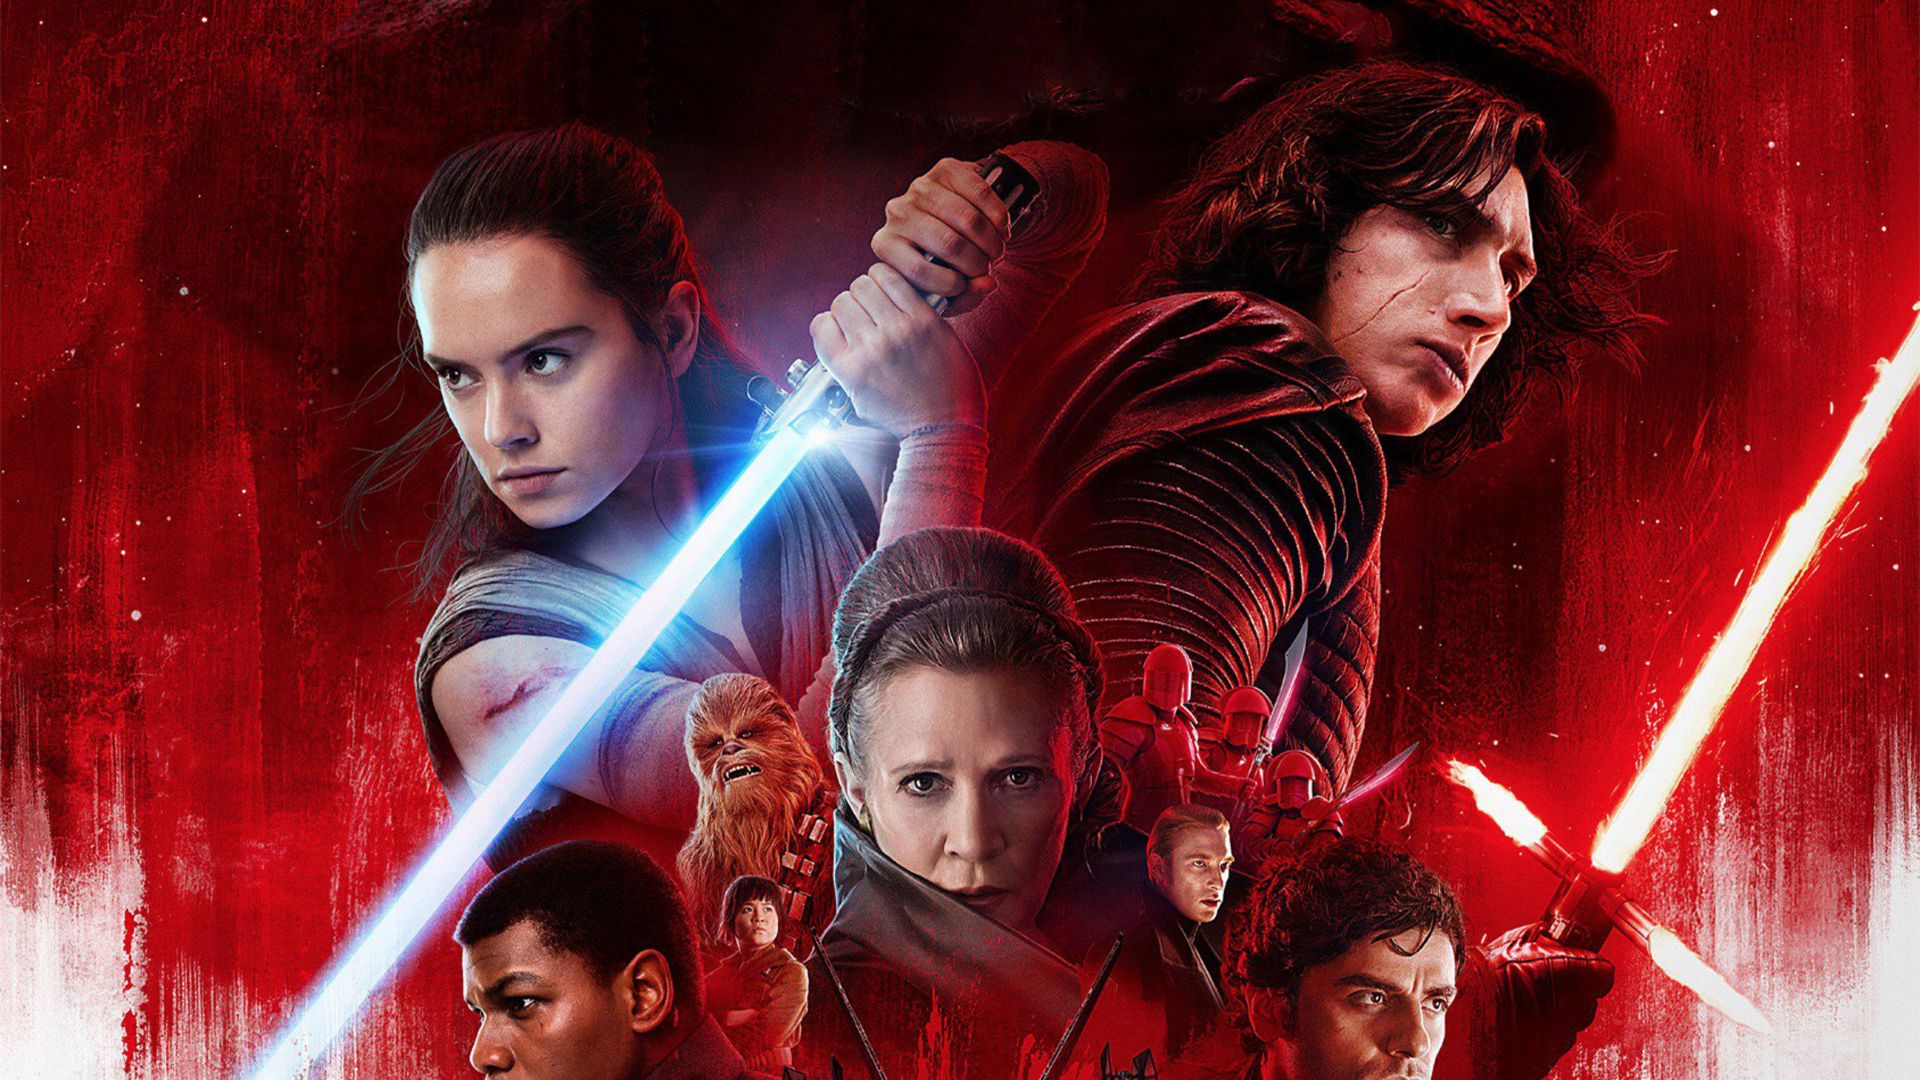 Звёздные войны: Последние джедаи, Star Wars: The Last Jedi, Daisy Ridley, Carrie Fisher, Adam Driver, poster, 4k (horizontal)